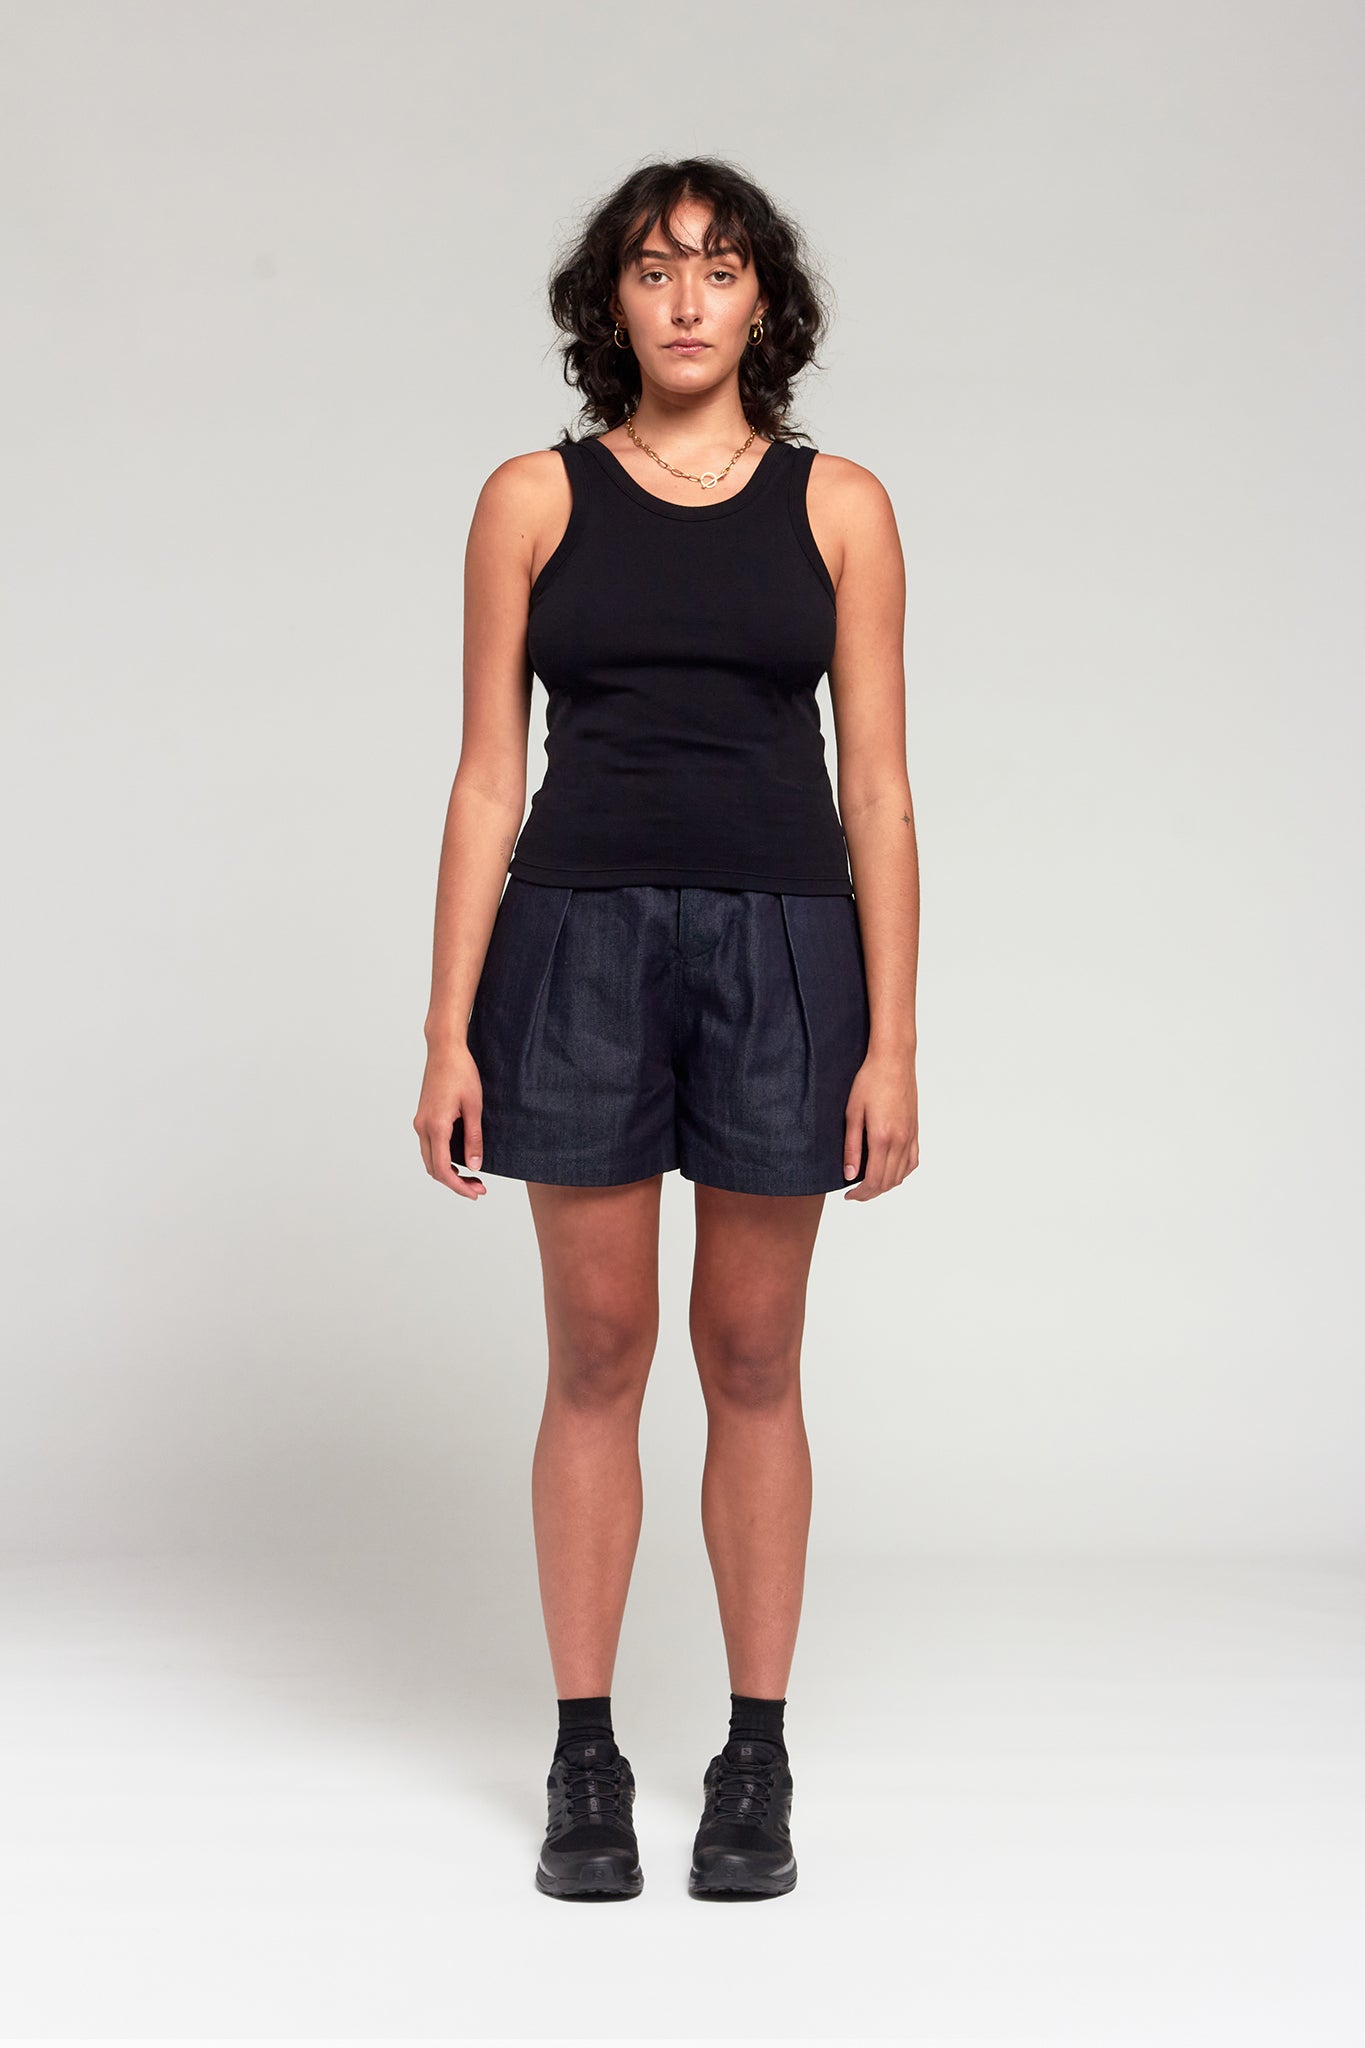 A.39 Tailored Raw Denim Shorts in Dark Indigo Organic Cotton